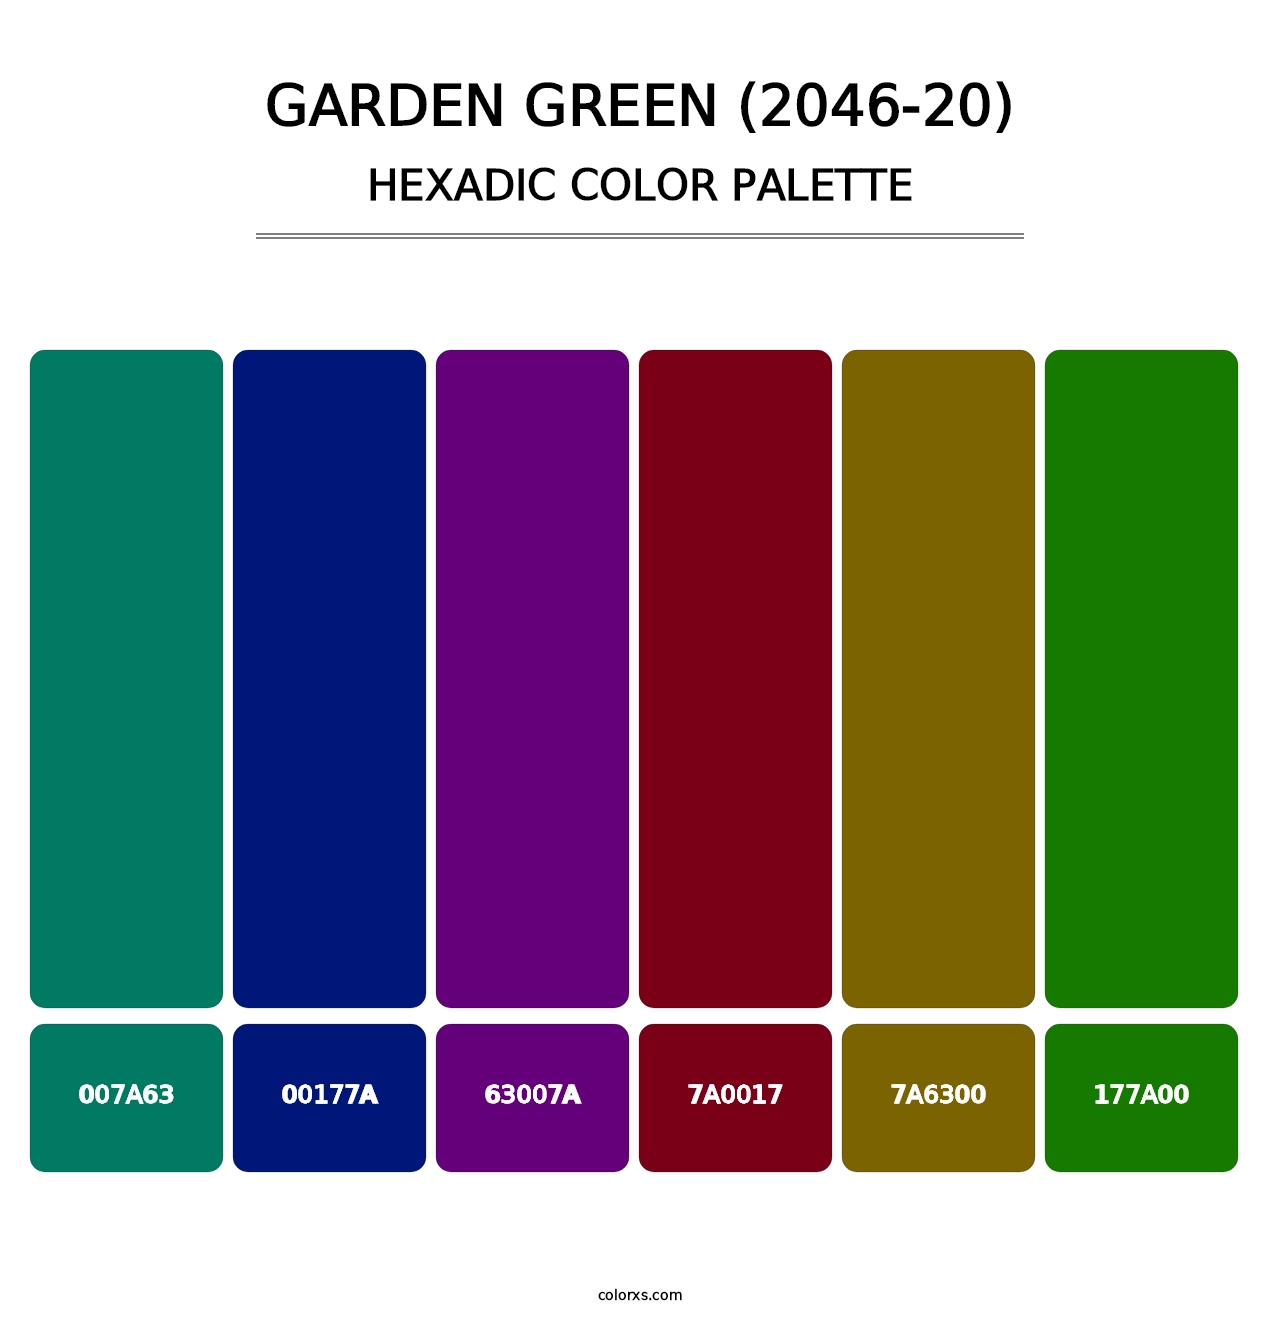 Garden Green (2046-20) - Hexadic Color Palette